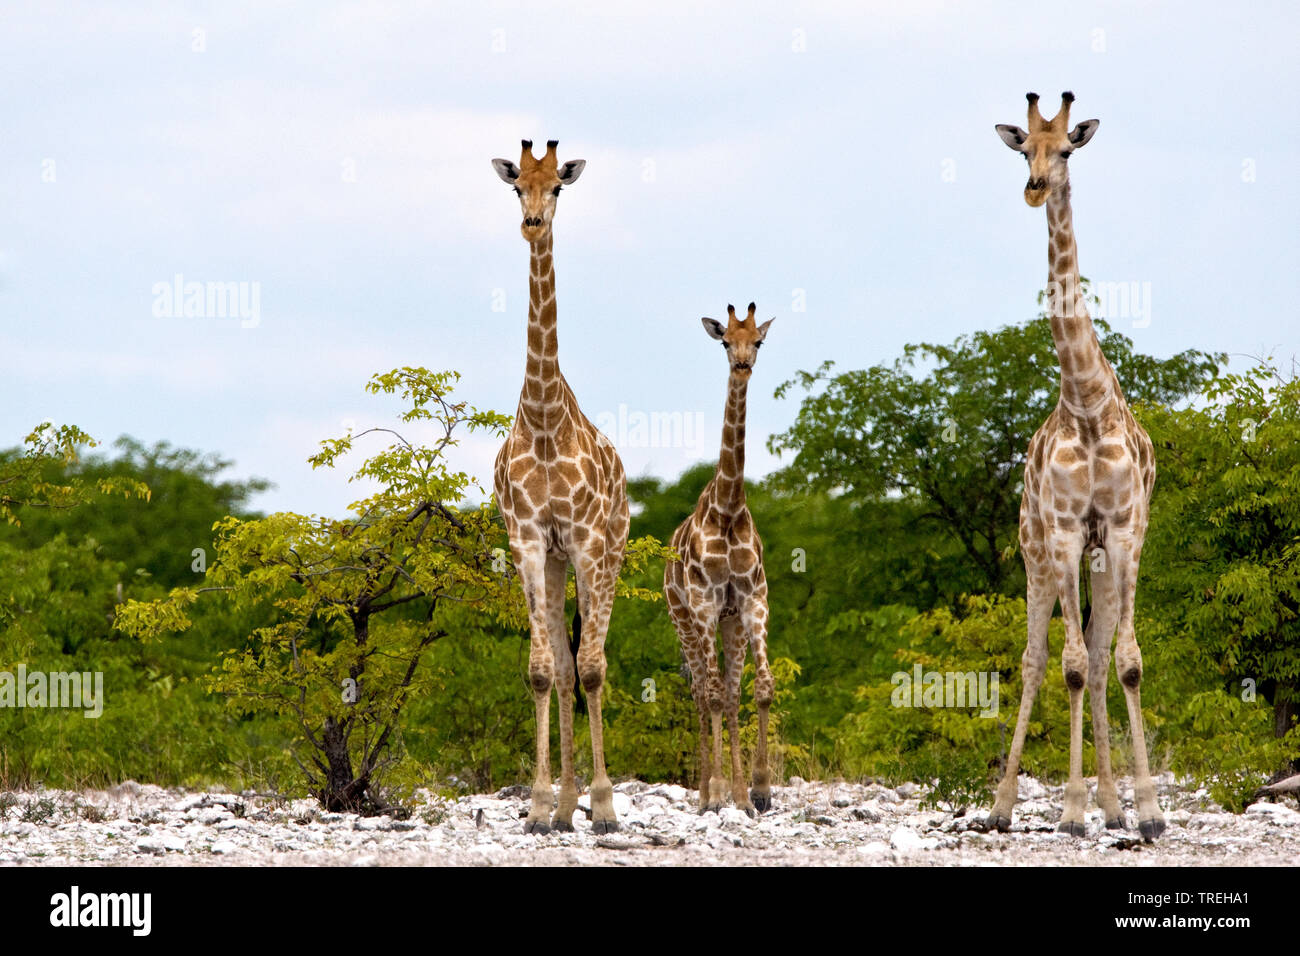 Angolan giraffe, Smoky giraffe (Giraffa camelopardalis angolensis), three giraffes , Namibia Stock Photo